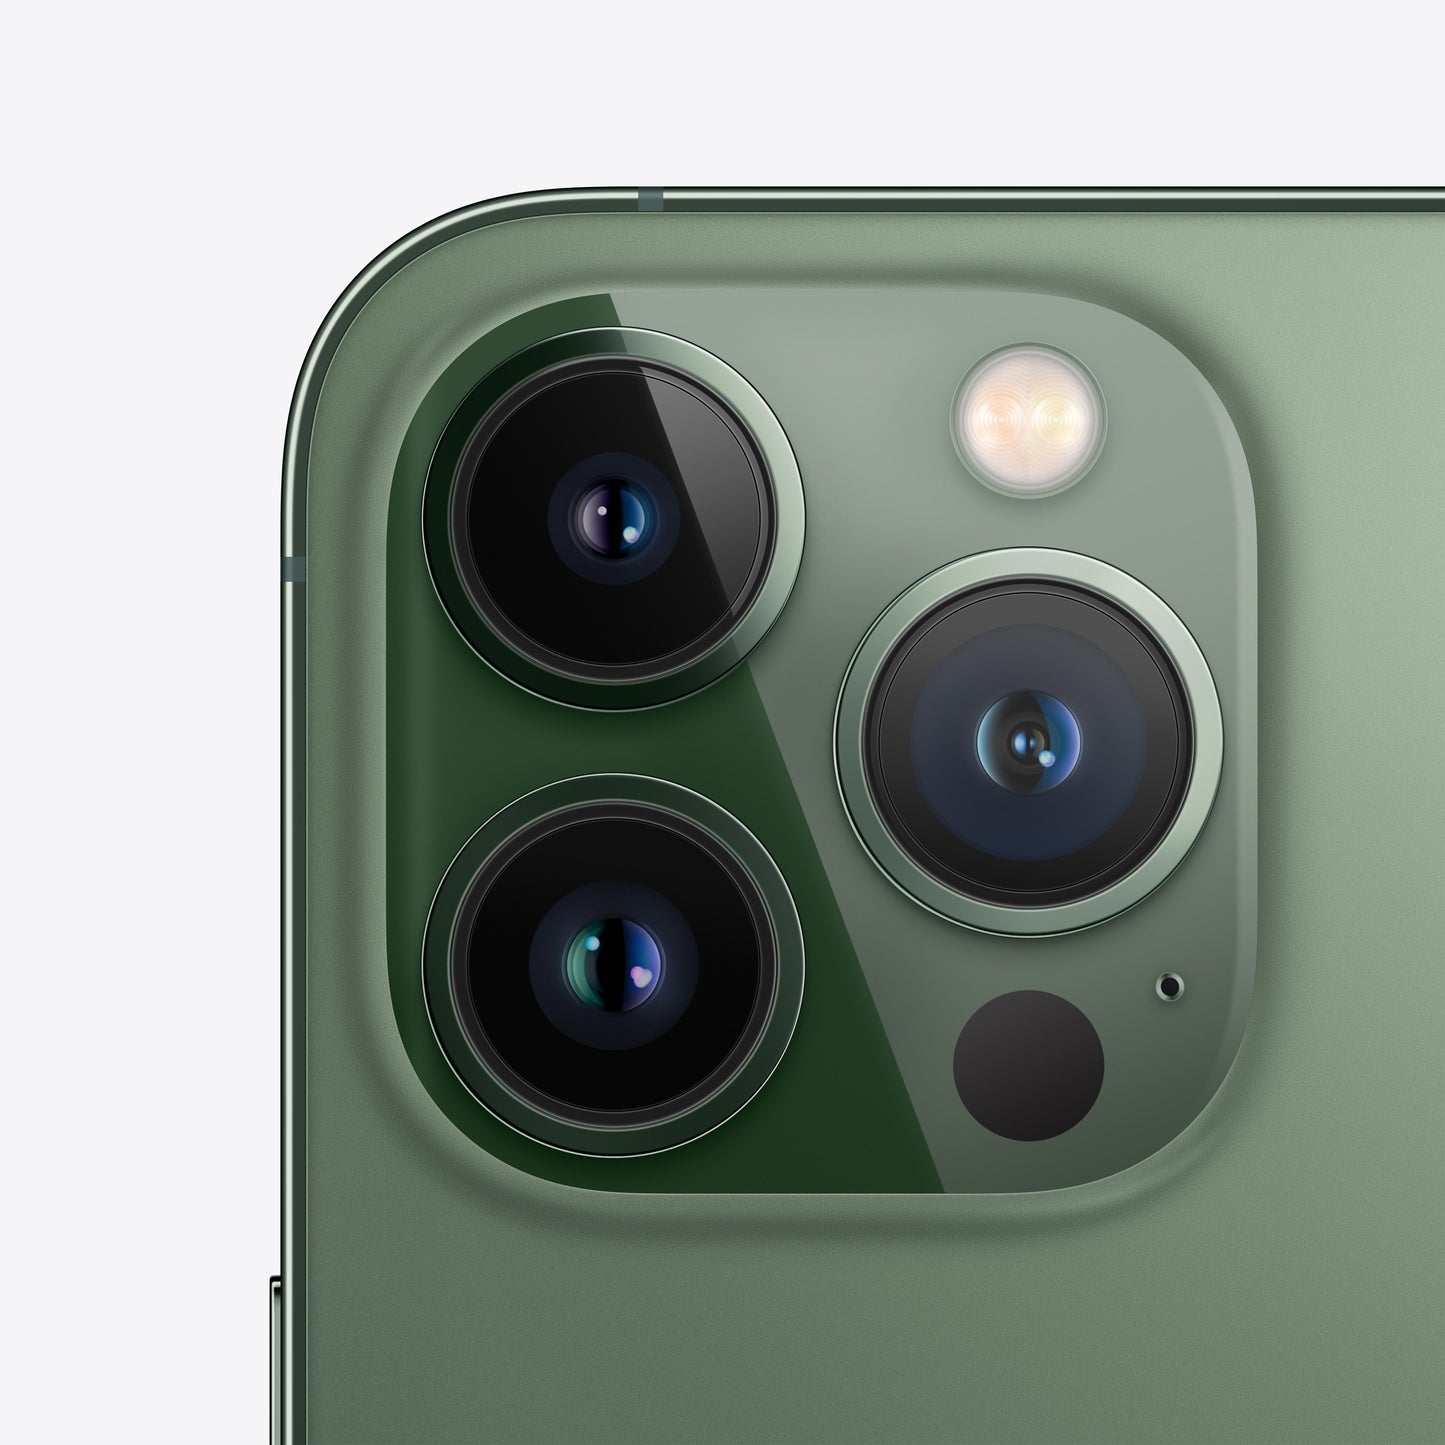 iPhone 13 Pro 512GB Alpine Green